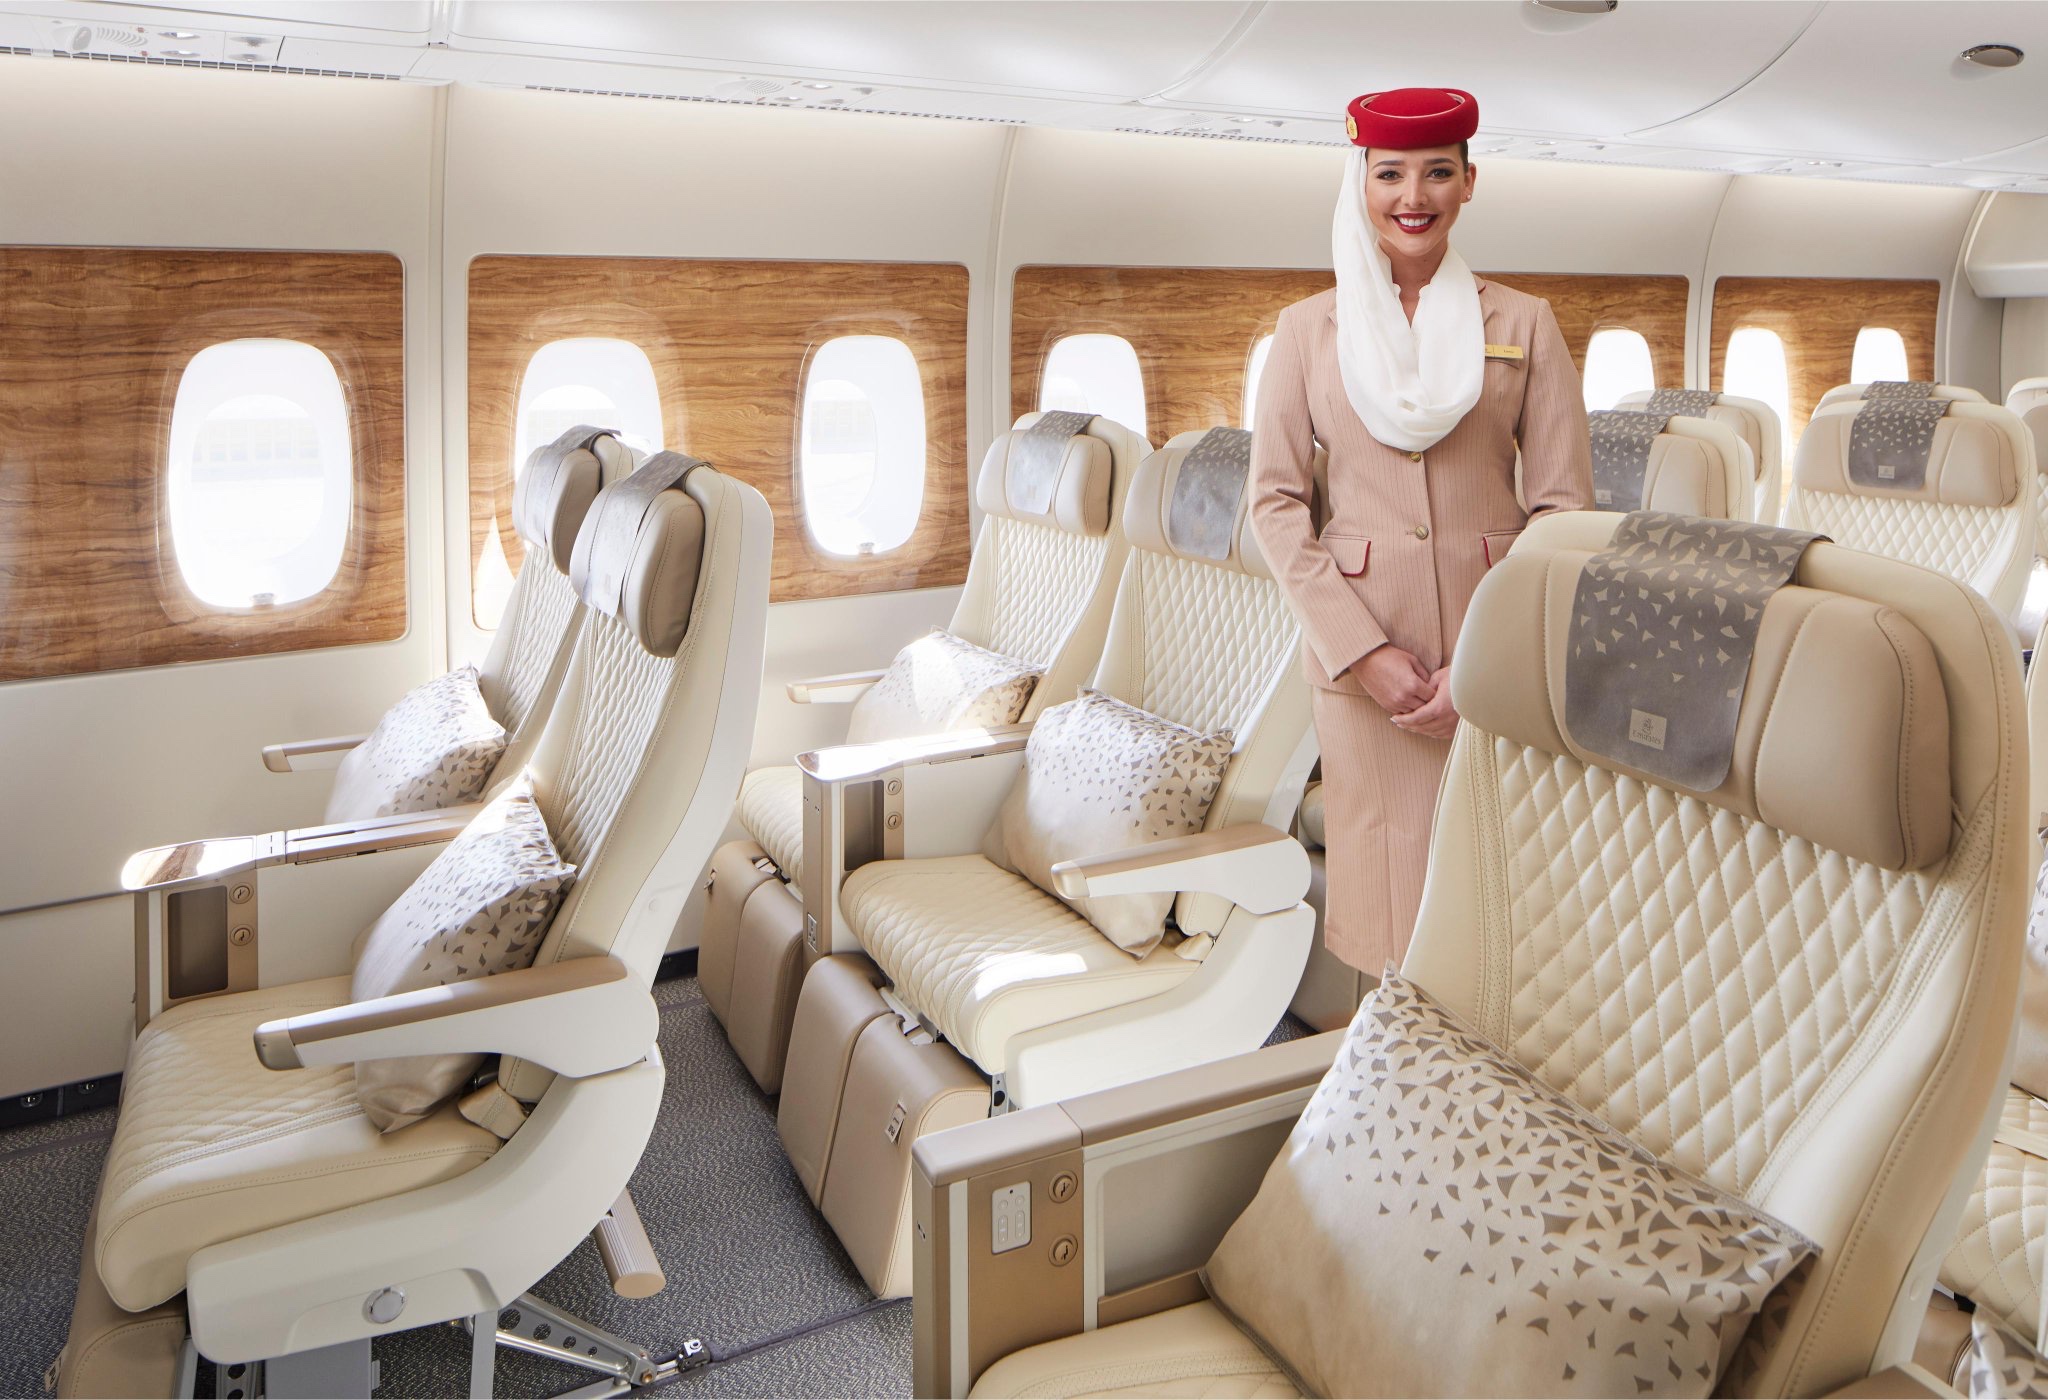 Emirates new Premium Economy cabin